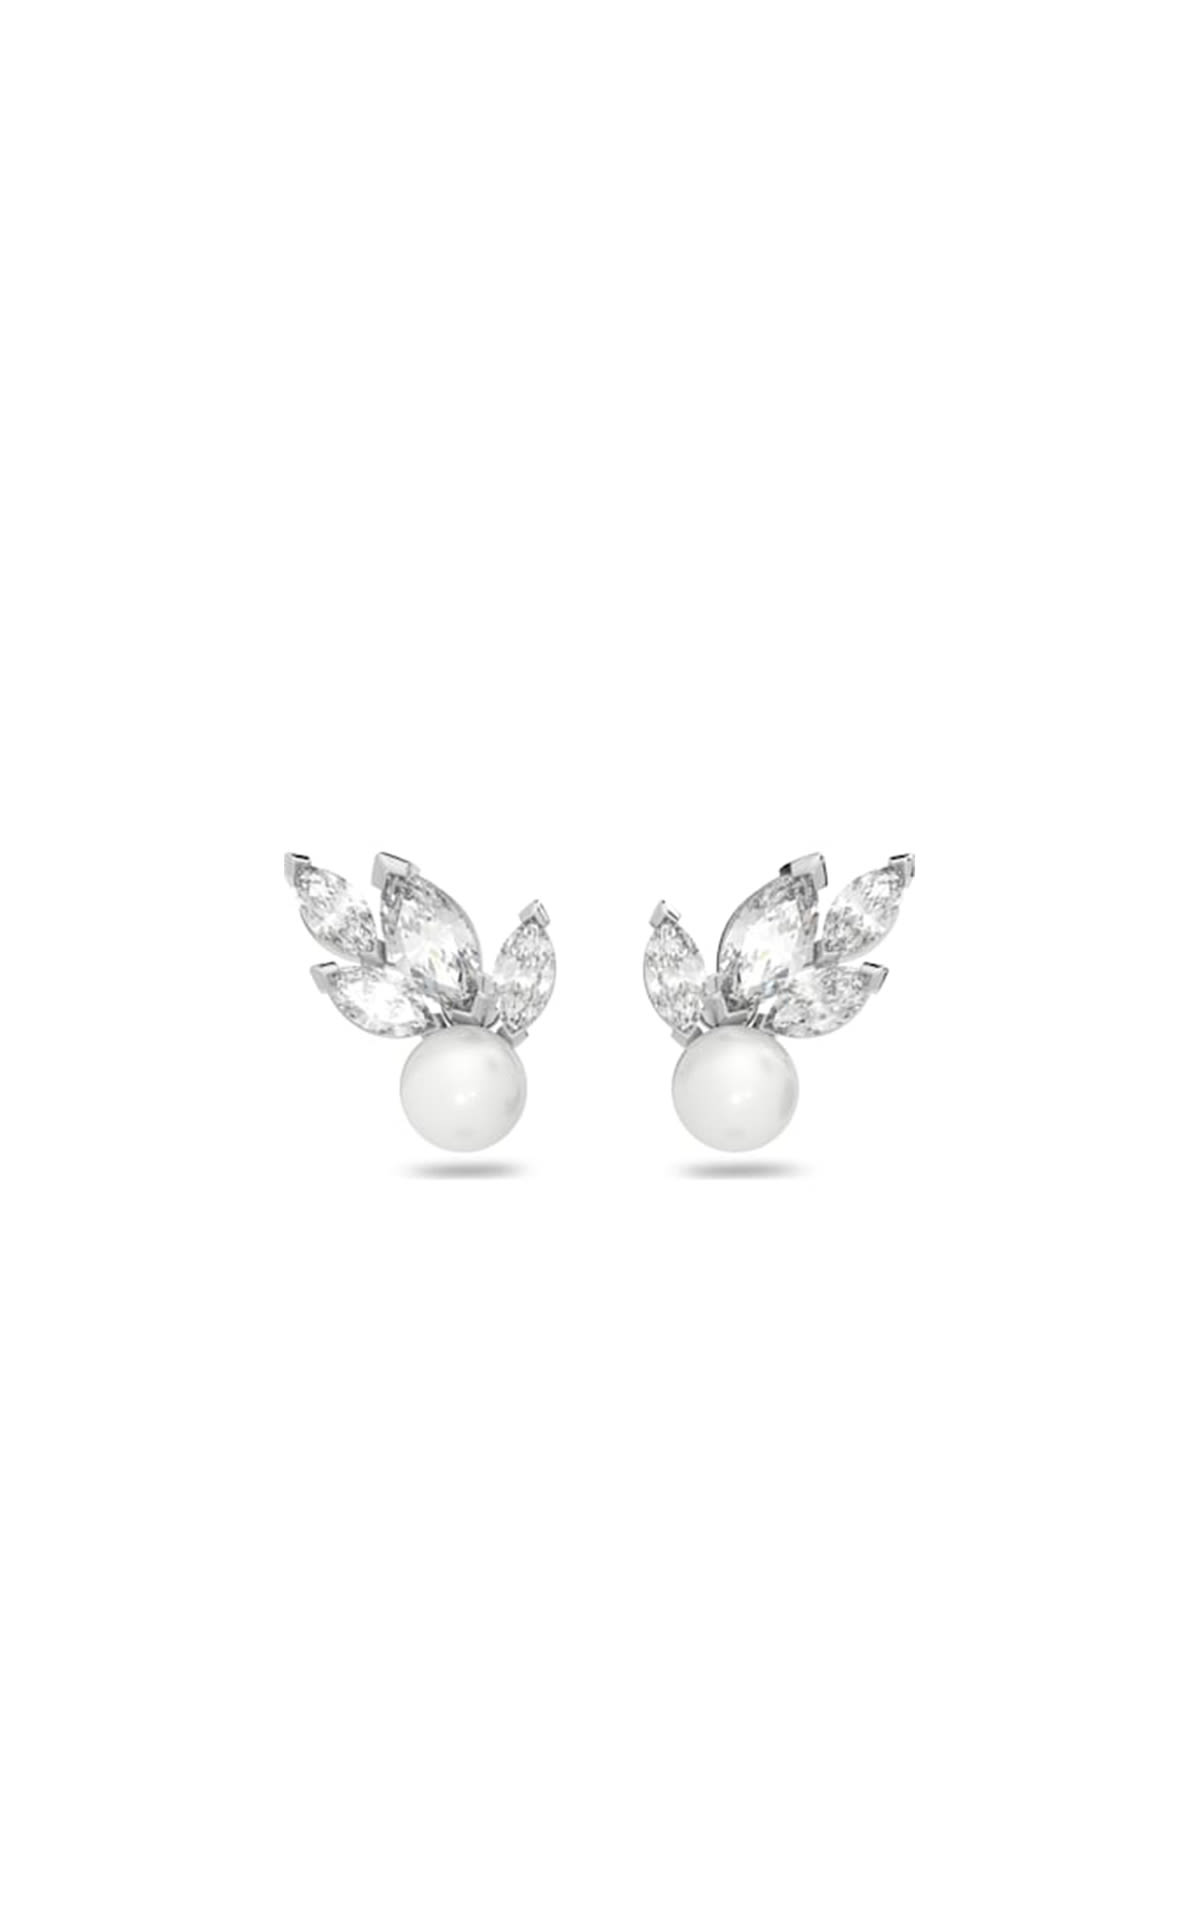 Swarovski Louison Pearl stud earrings, white rhodium-plated